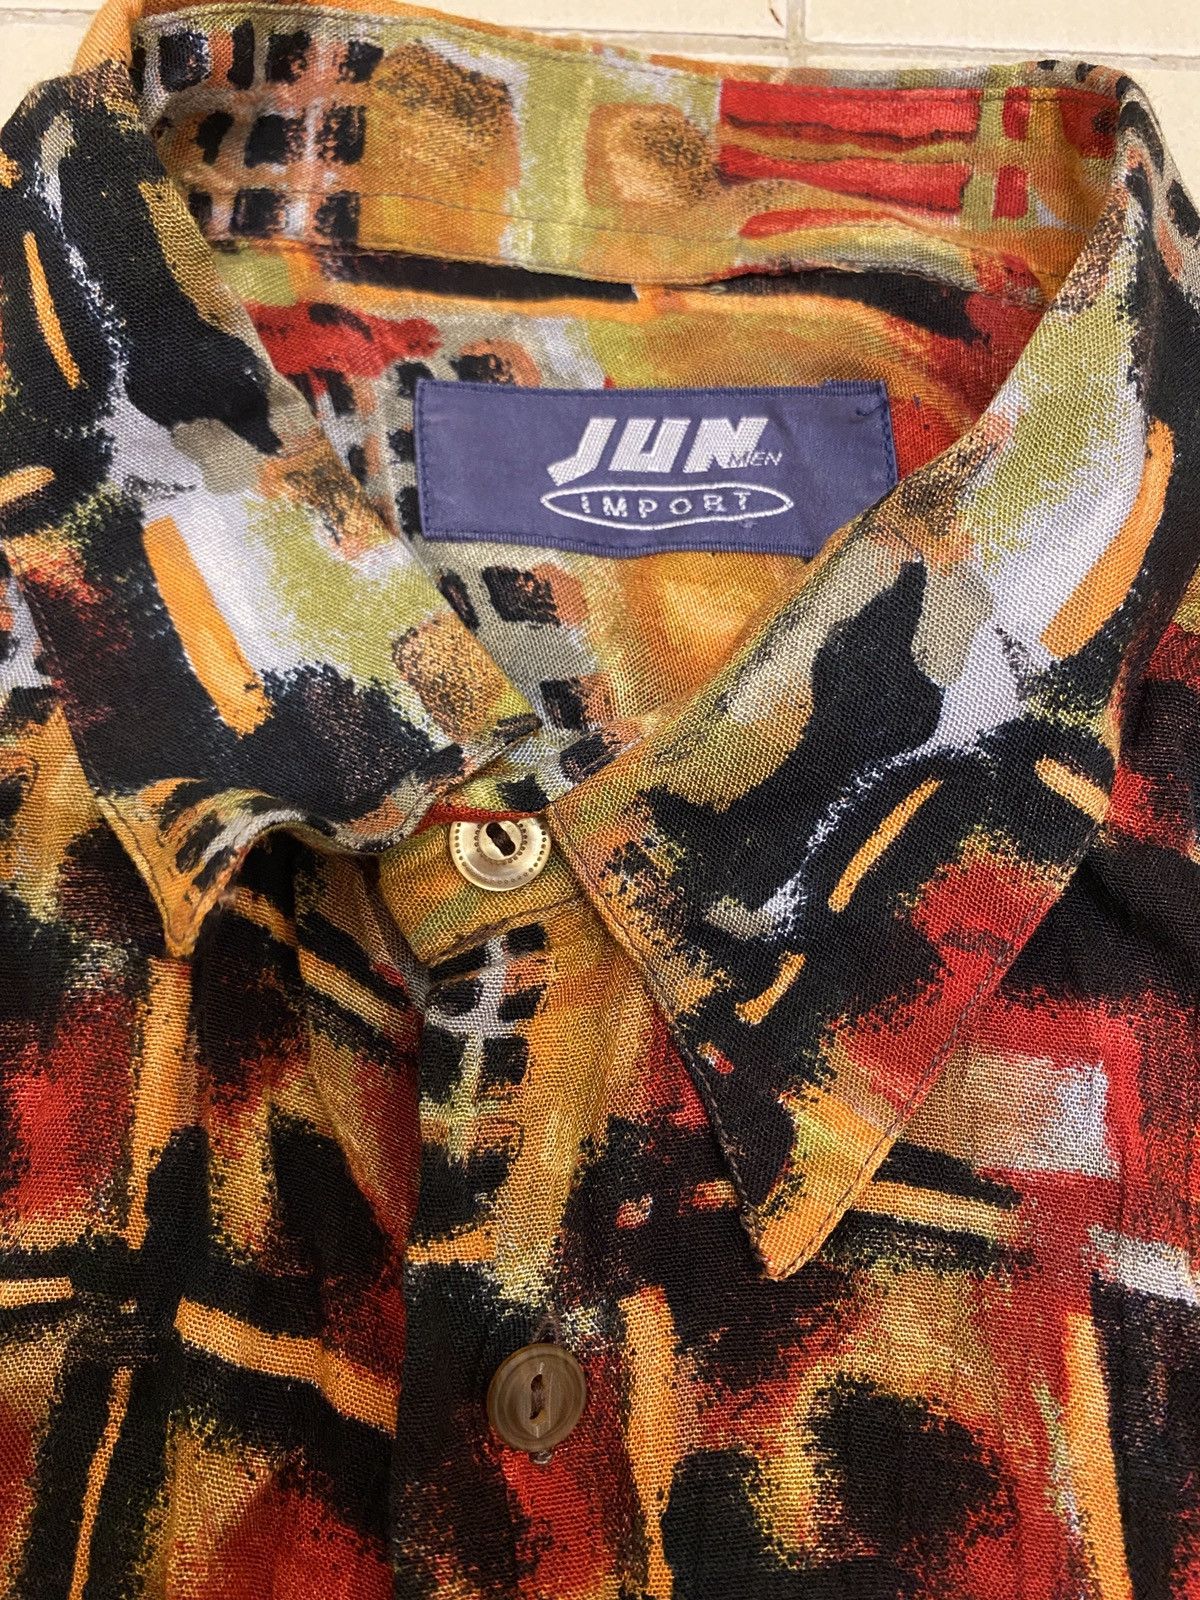 Japanese Brand - Jun men rayon shirt - 9